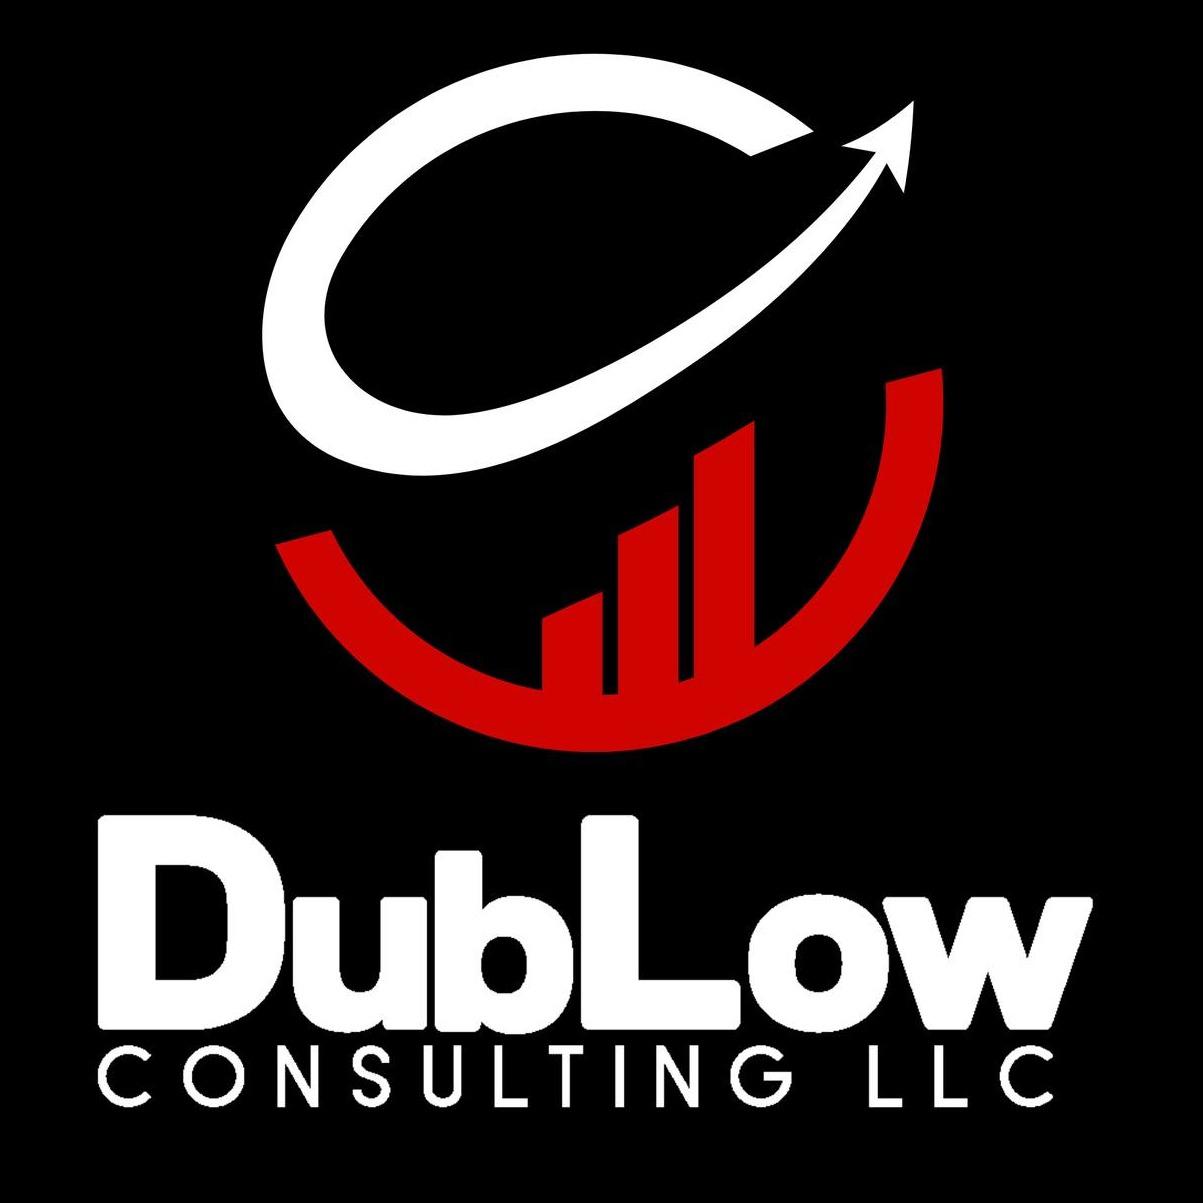 DubLow Consulting LLC - Edwards, CO - (970)446-9440 | ShowMeLocal.com